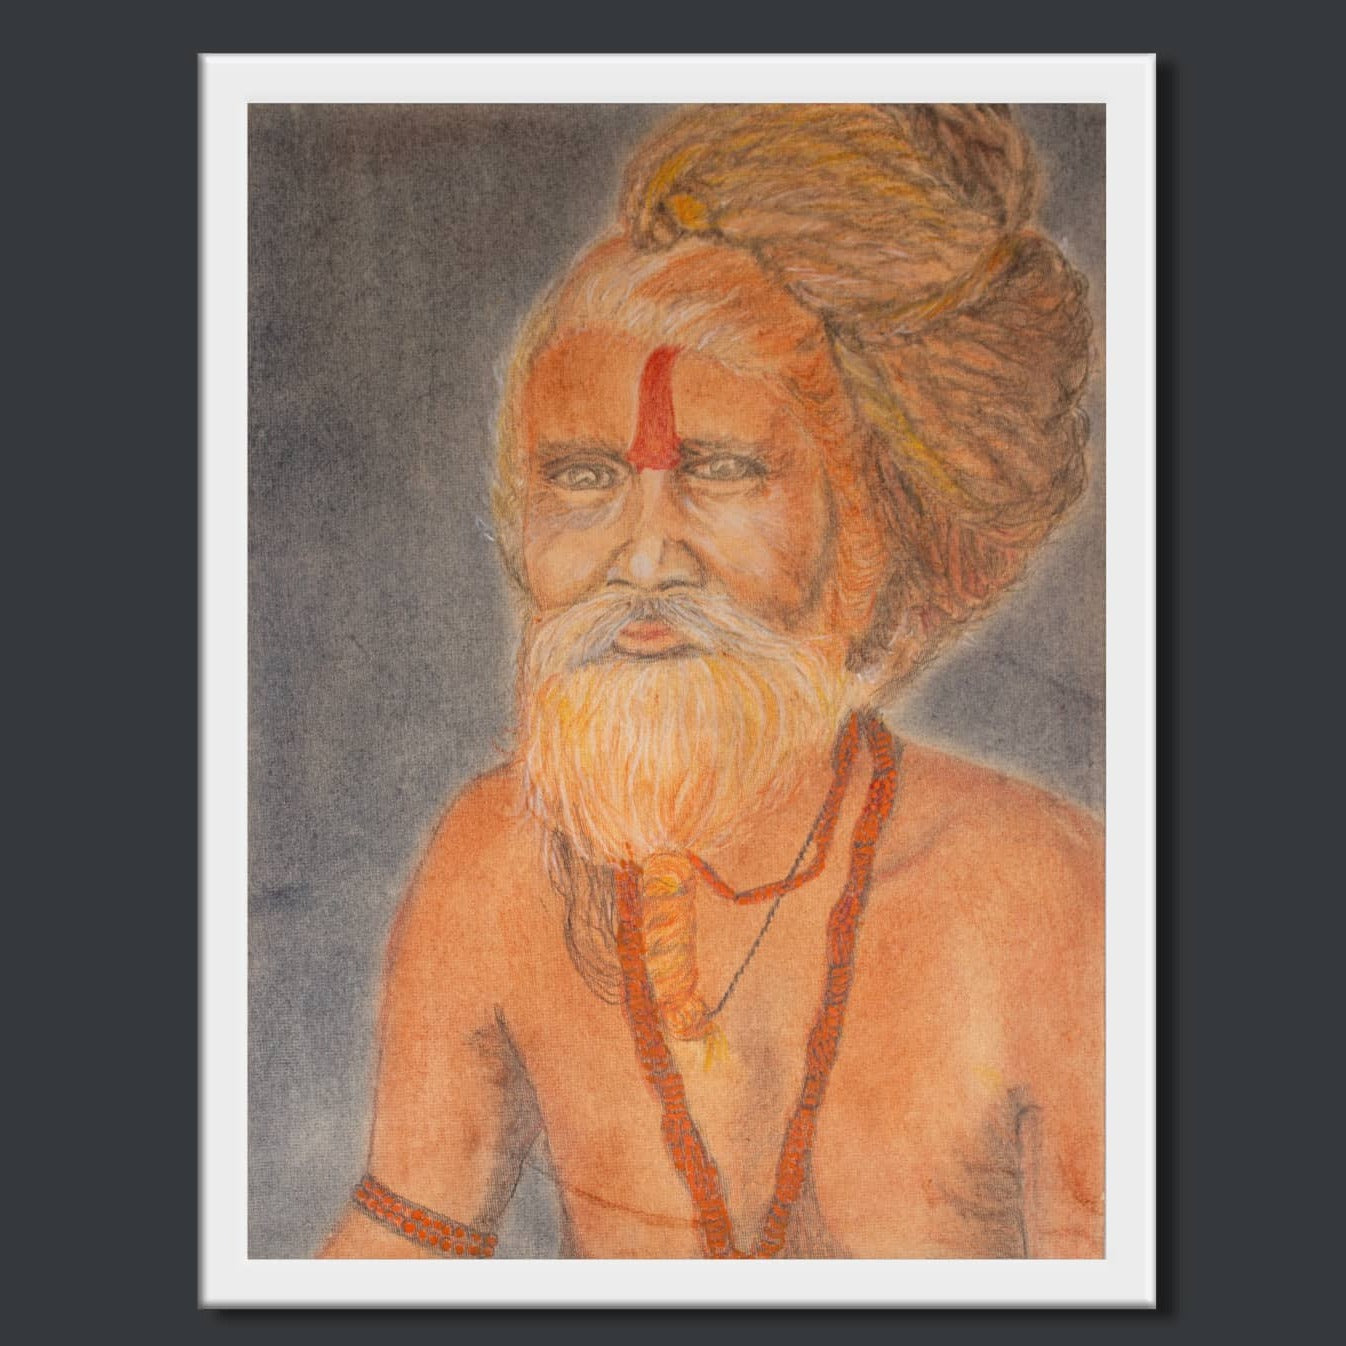 INVISIBLE LIVES - Art Work by Meenakshi Ratnakar (38 cm x 30 cm)